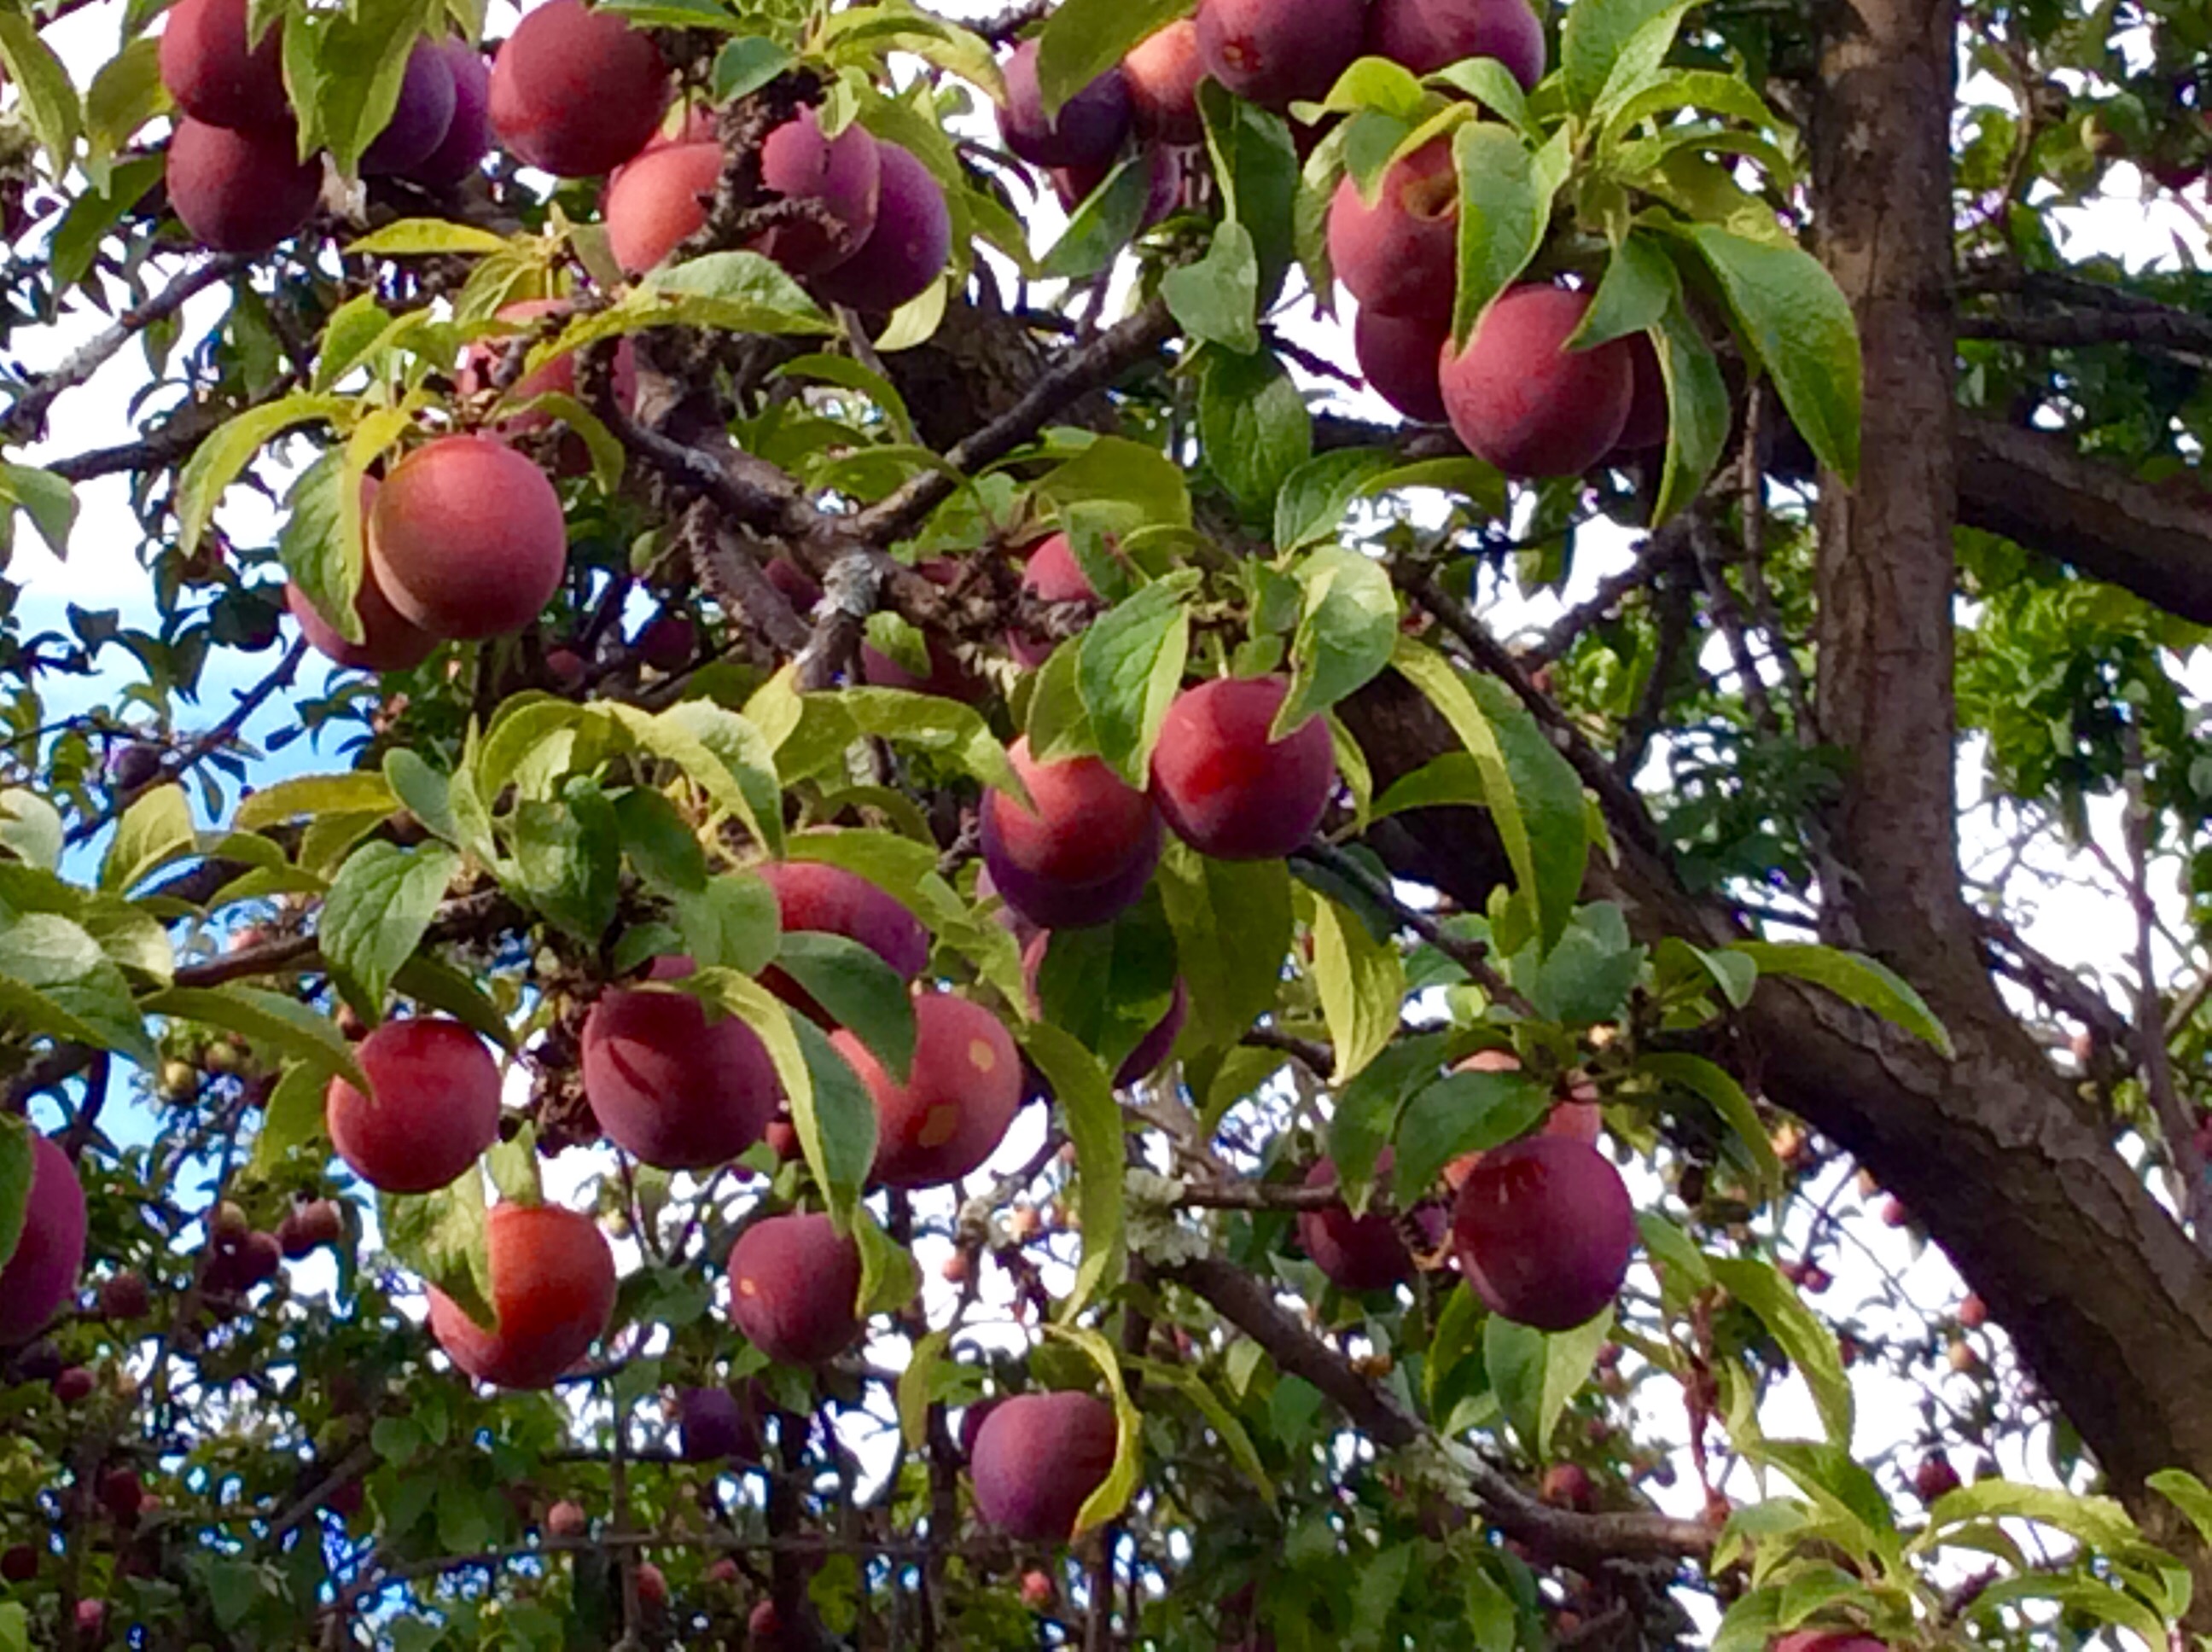 My plum tree